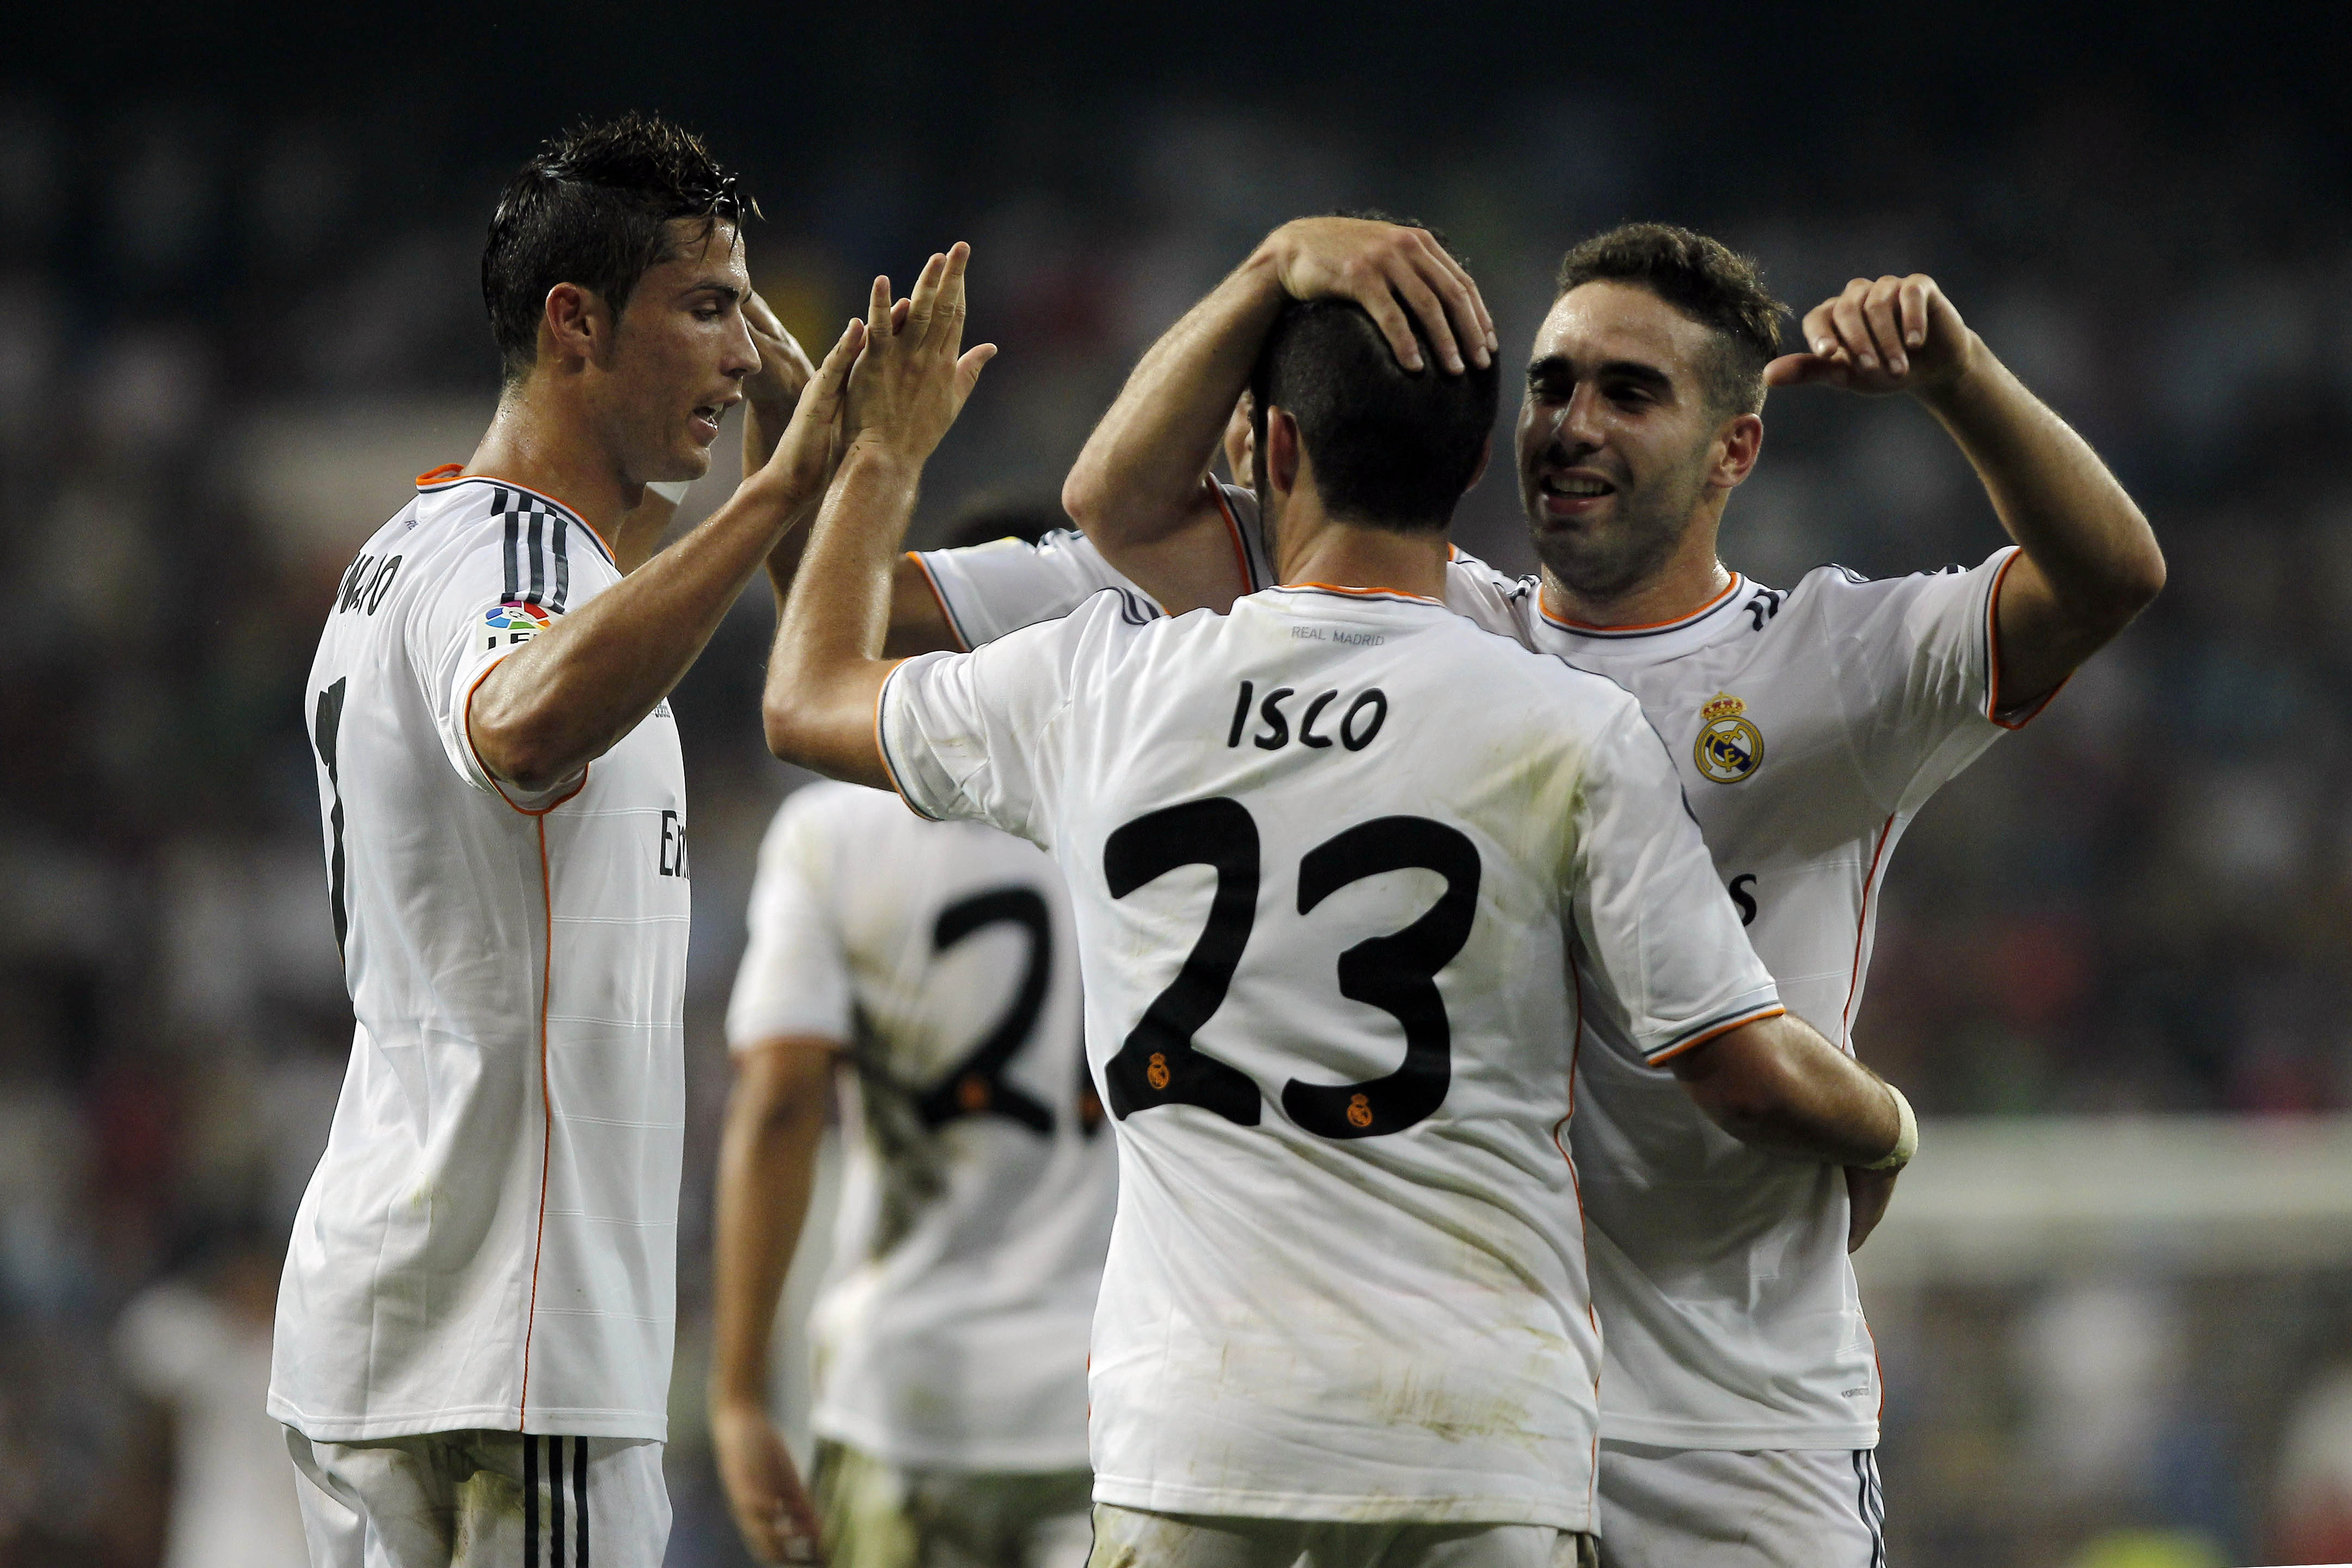 Grupp 2 består av: Real Madrid.